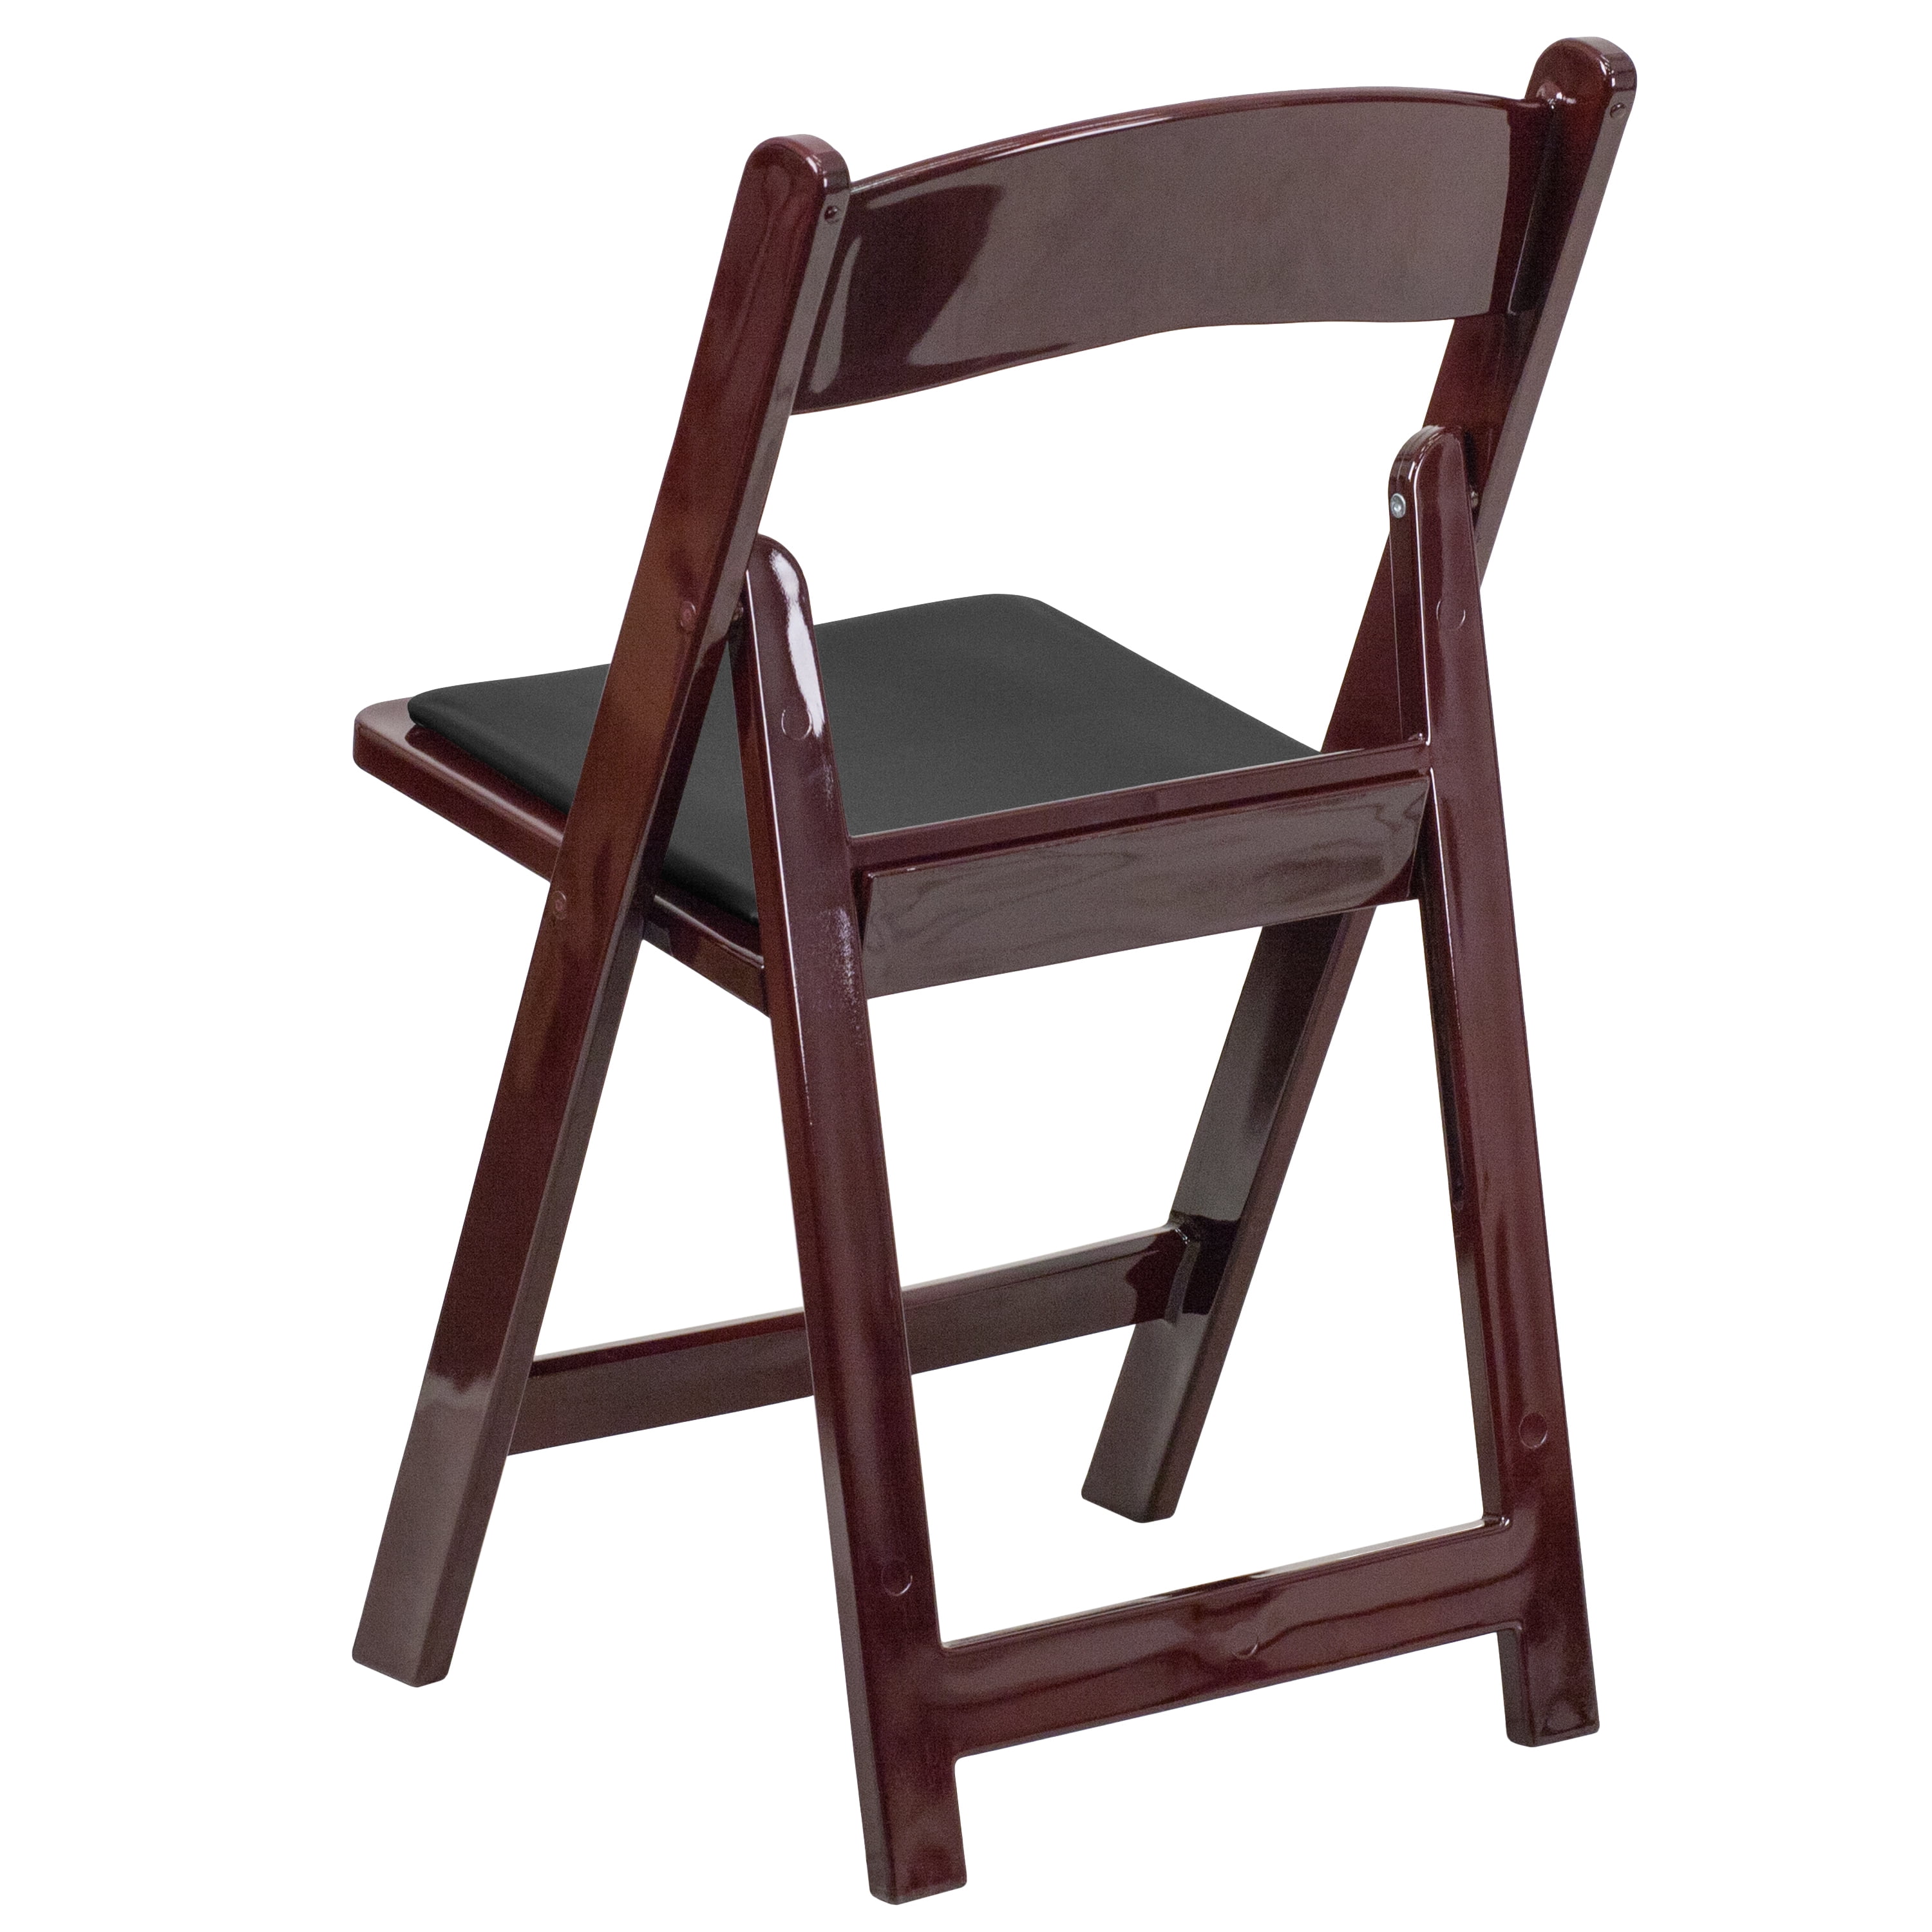 AGAGSHJDJDJJ FSGHSHDJDJKGKGK?!?!?!???! - Well Oiled Folding Chair